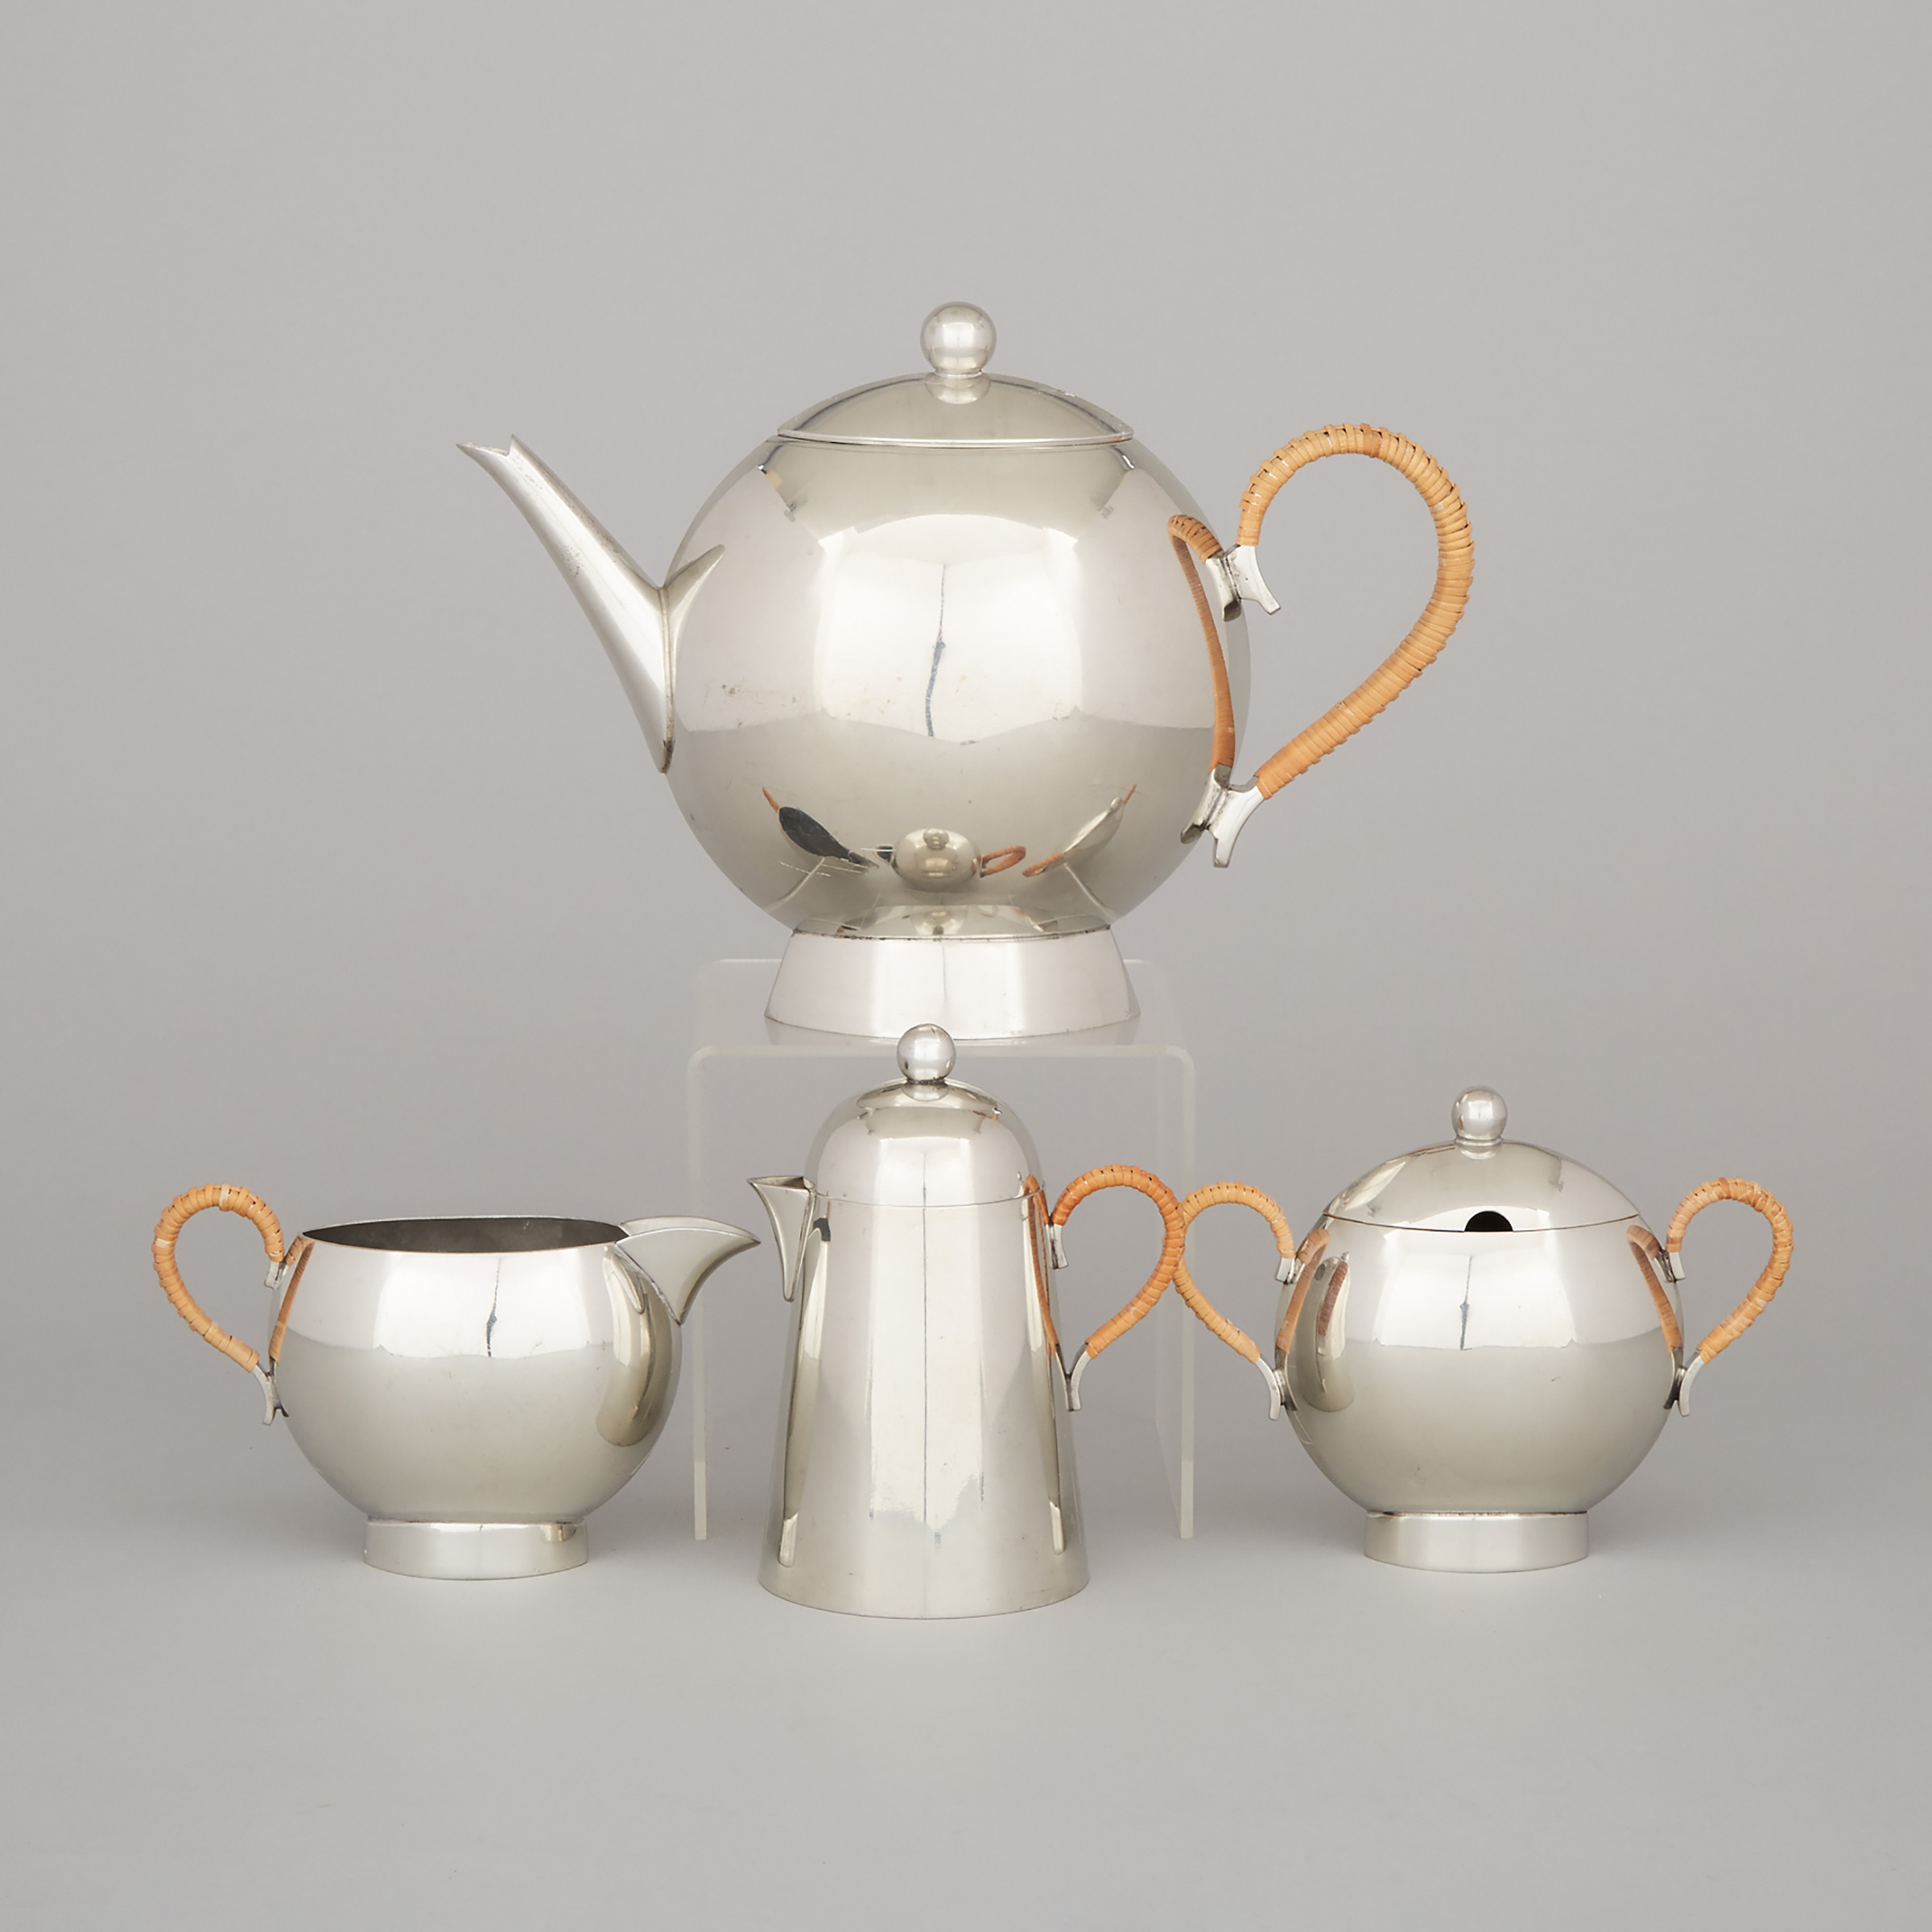 Four Piece Contemporary Nick Munro Pewter Tea Service, late 20th century